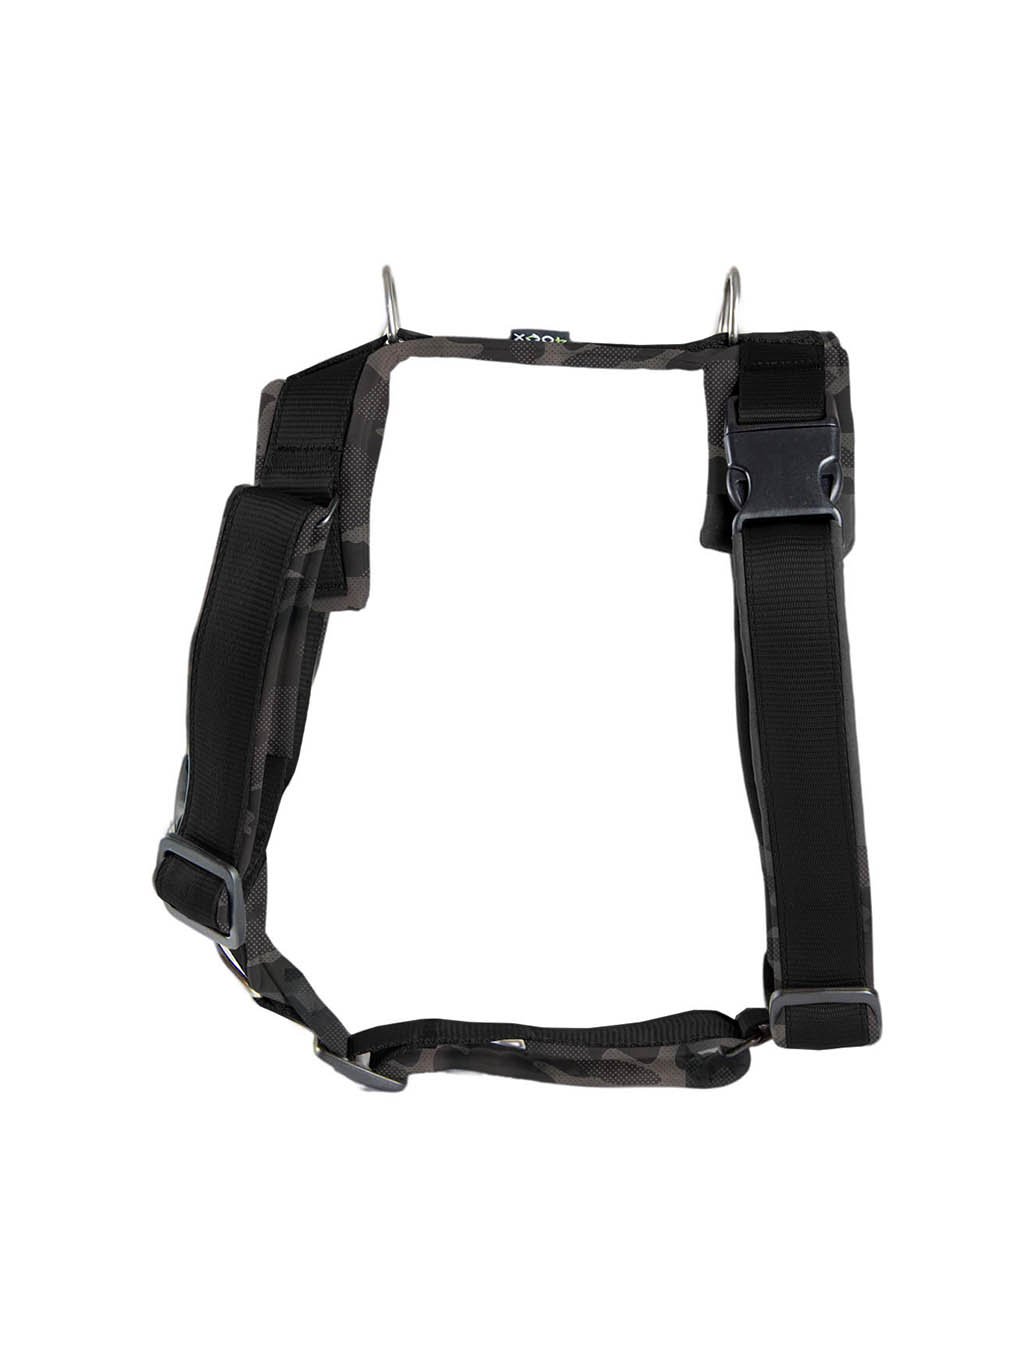 Comfort plus harness - black reflective camouflage